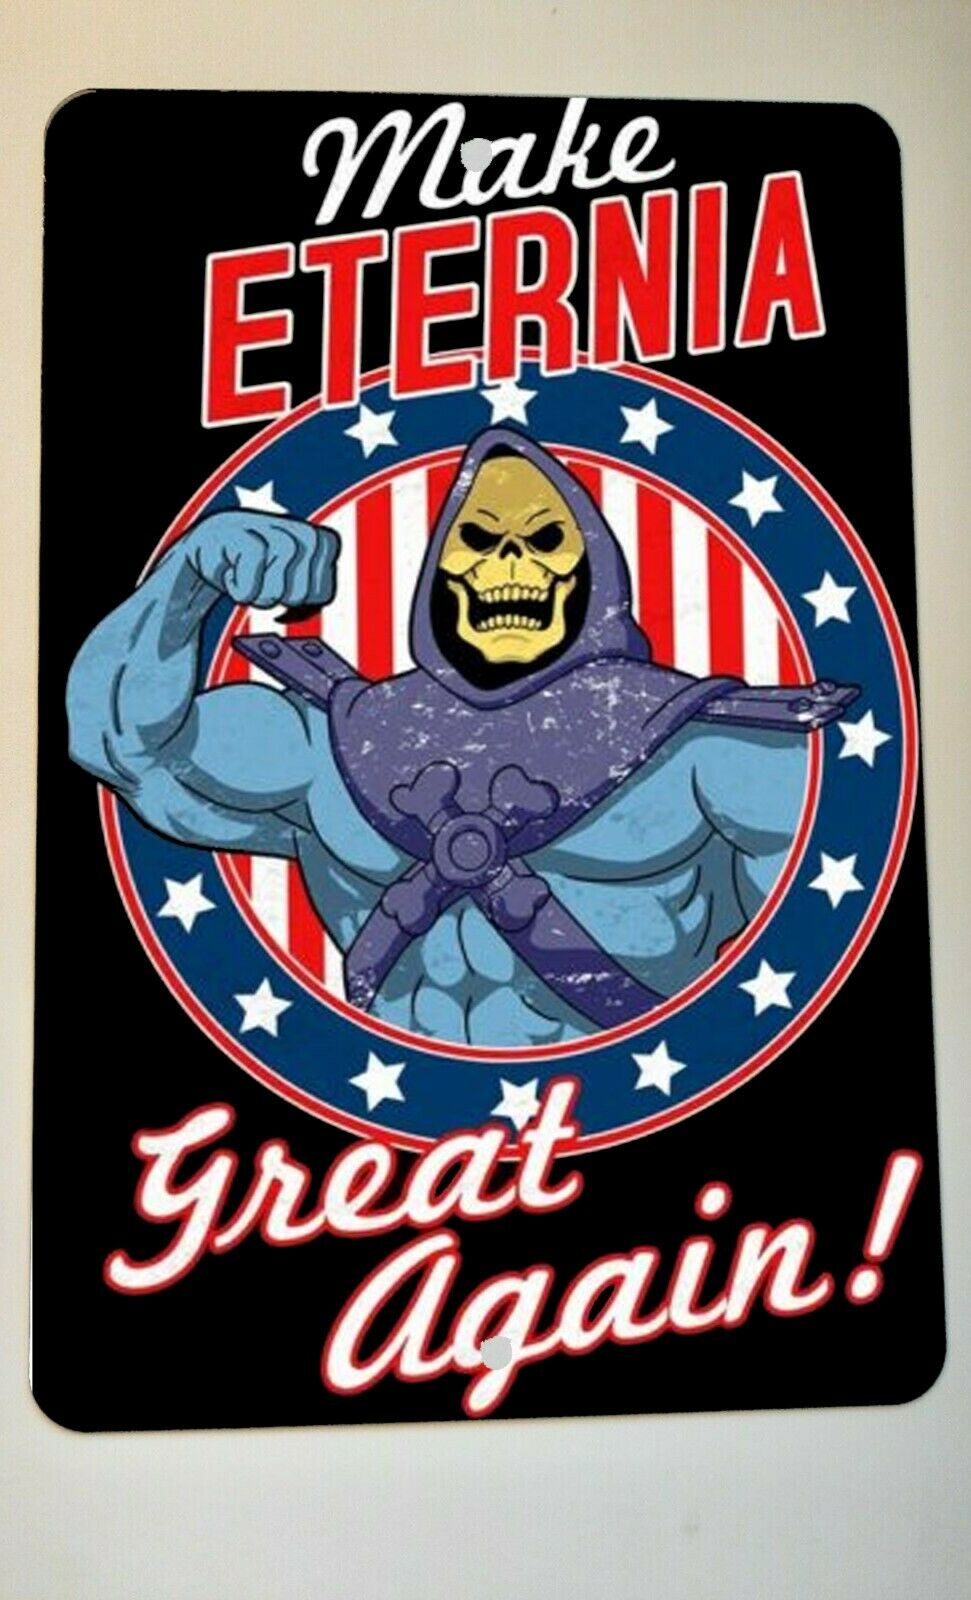 Make Eternia Great Again Skeletor MOTU Masters of the Universe 8x12 Metal Sign Retro 80s Cartoon